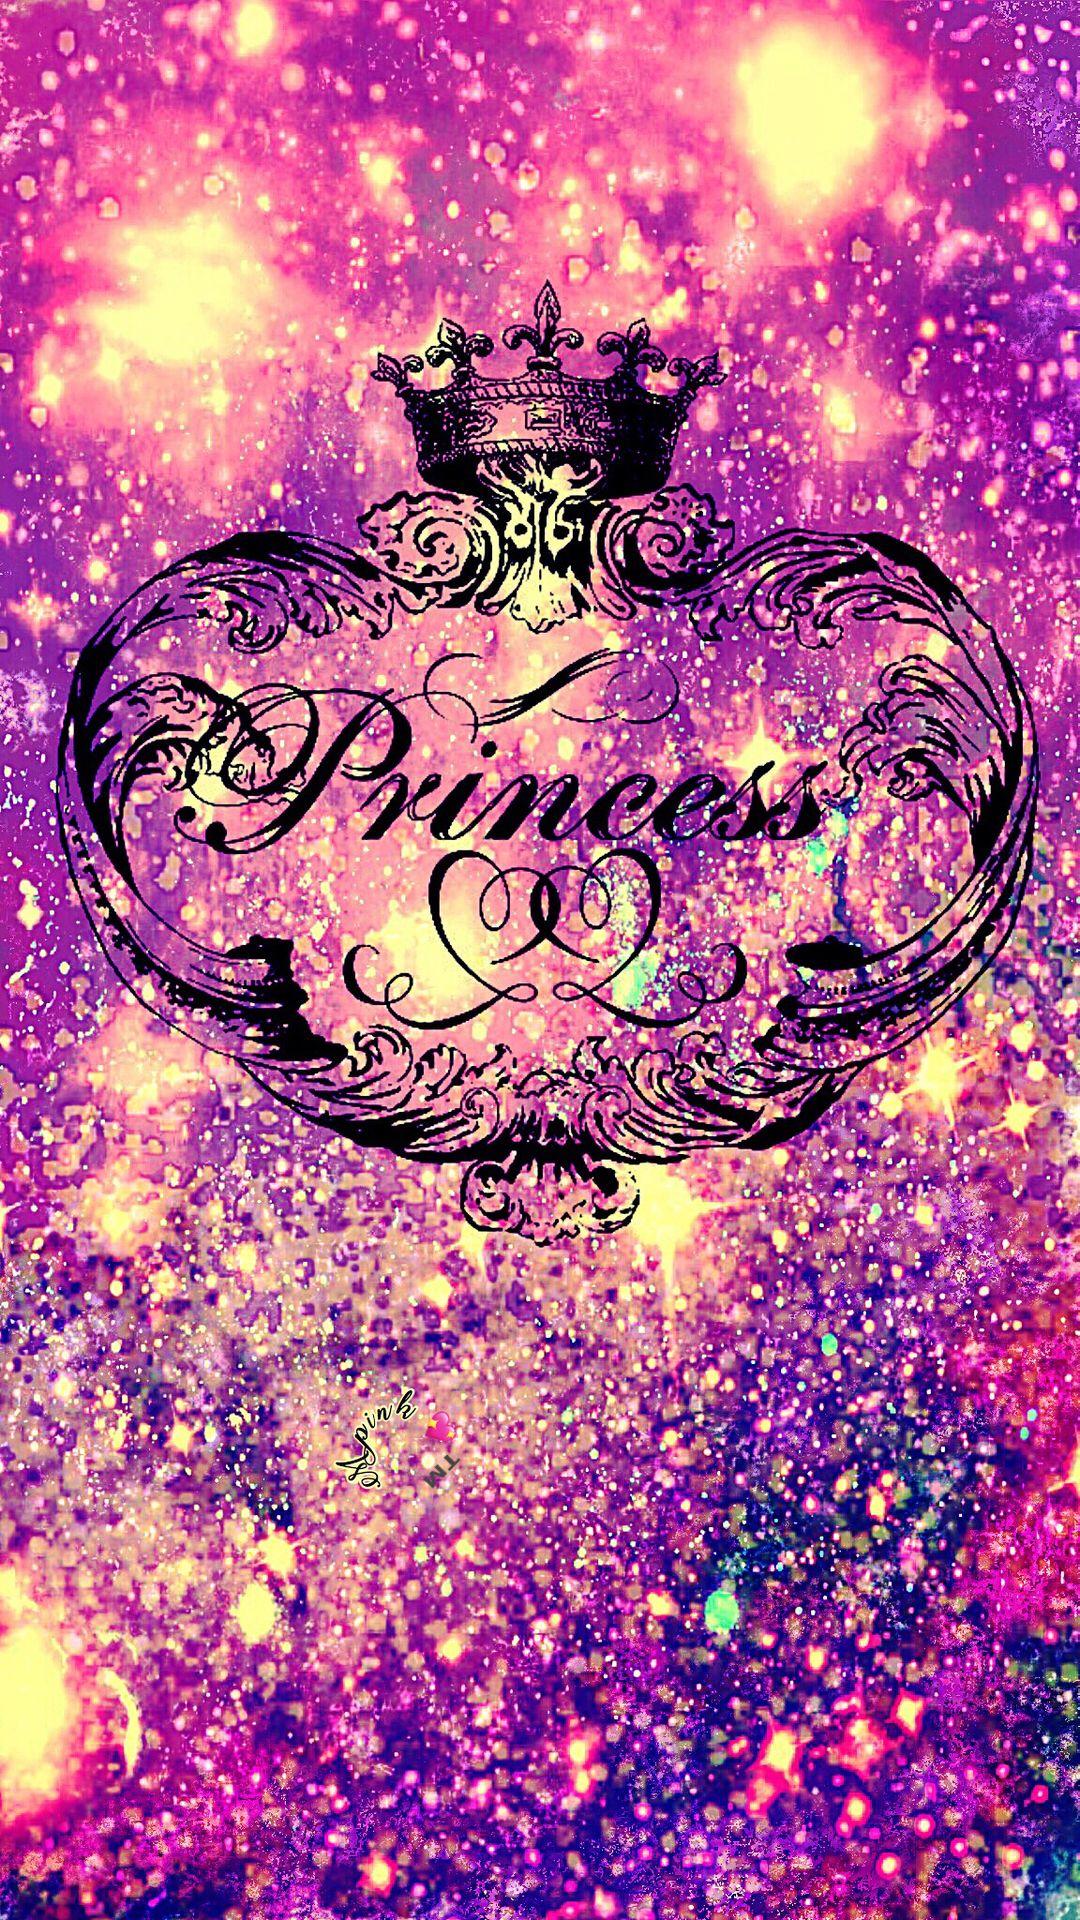 Disney Princess Collection: Phone Wallpapers | Blog | Skinnydip London